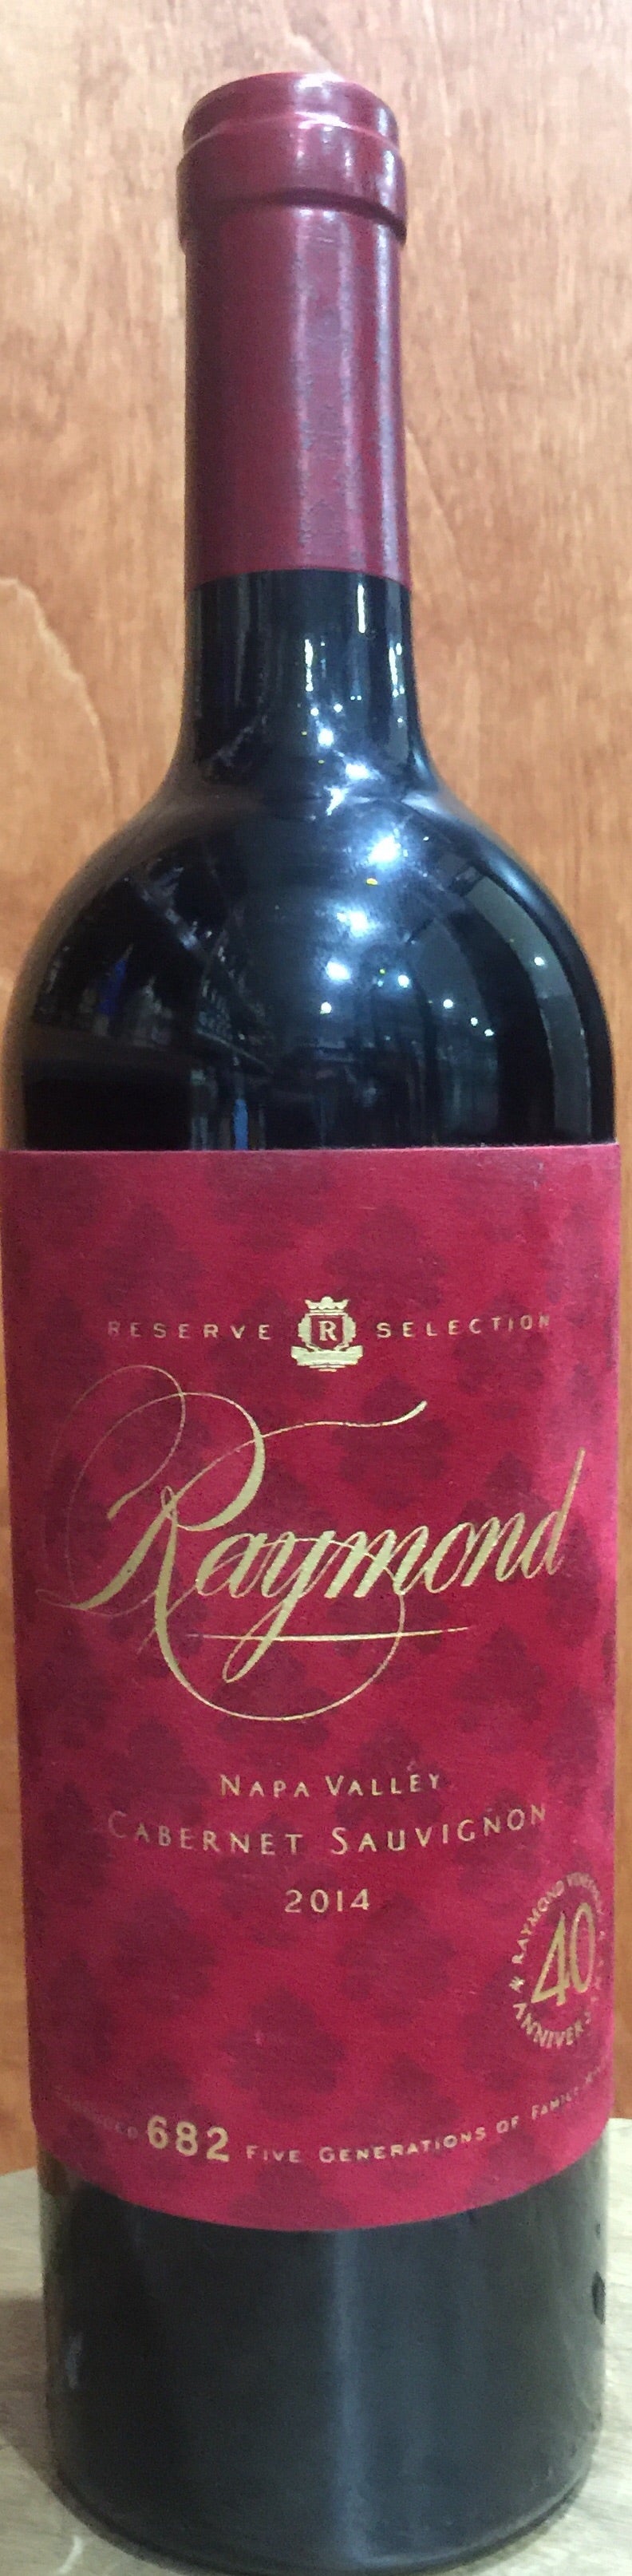 RAYMOND CABERNET SAUVIGNON 2014 (40TH ANNIVERSARY) - Bk Wine Depot Corp